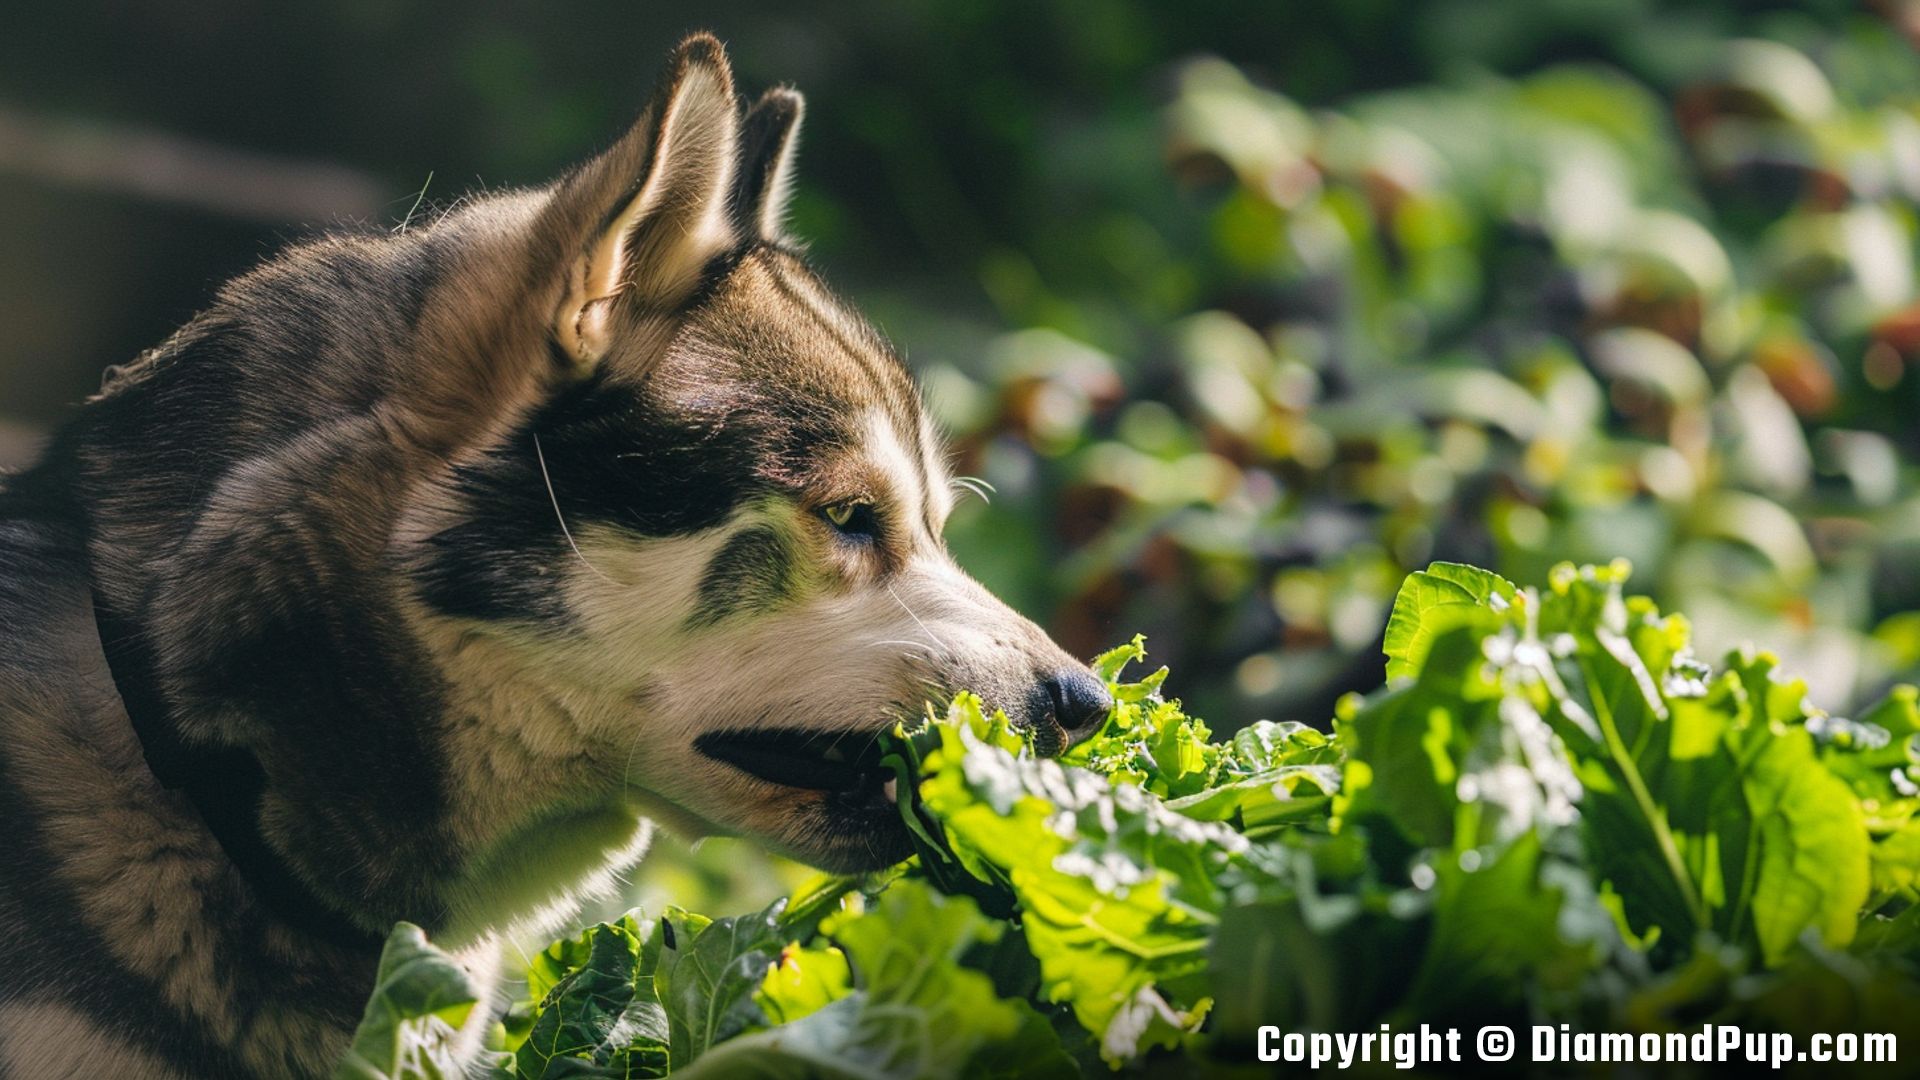 Photograph of a Playful Husky Snacking on Lettuce